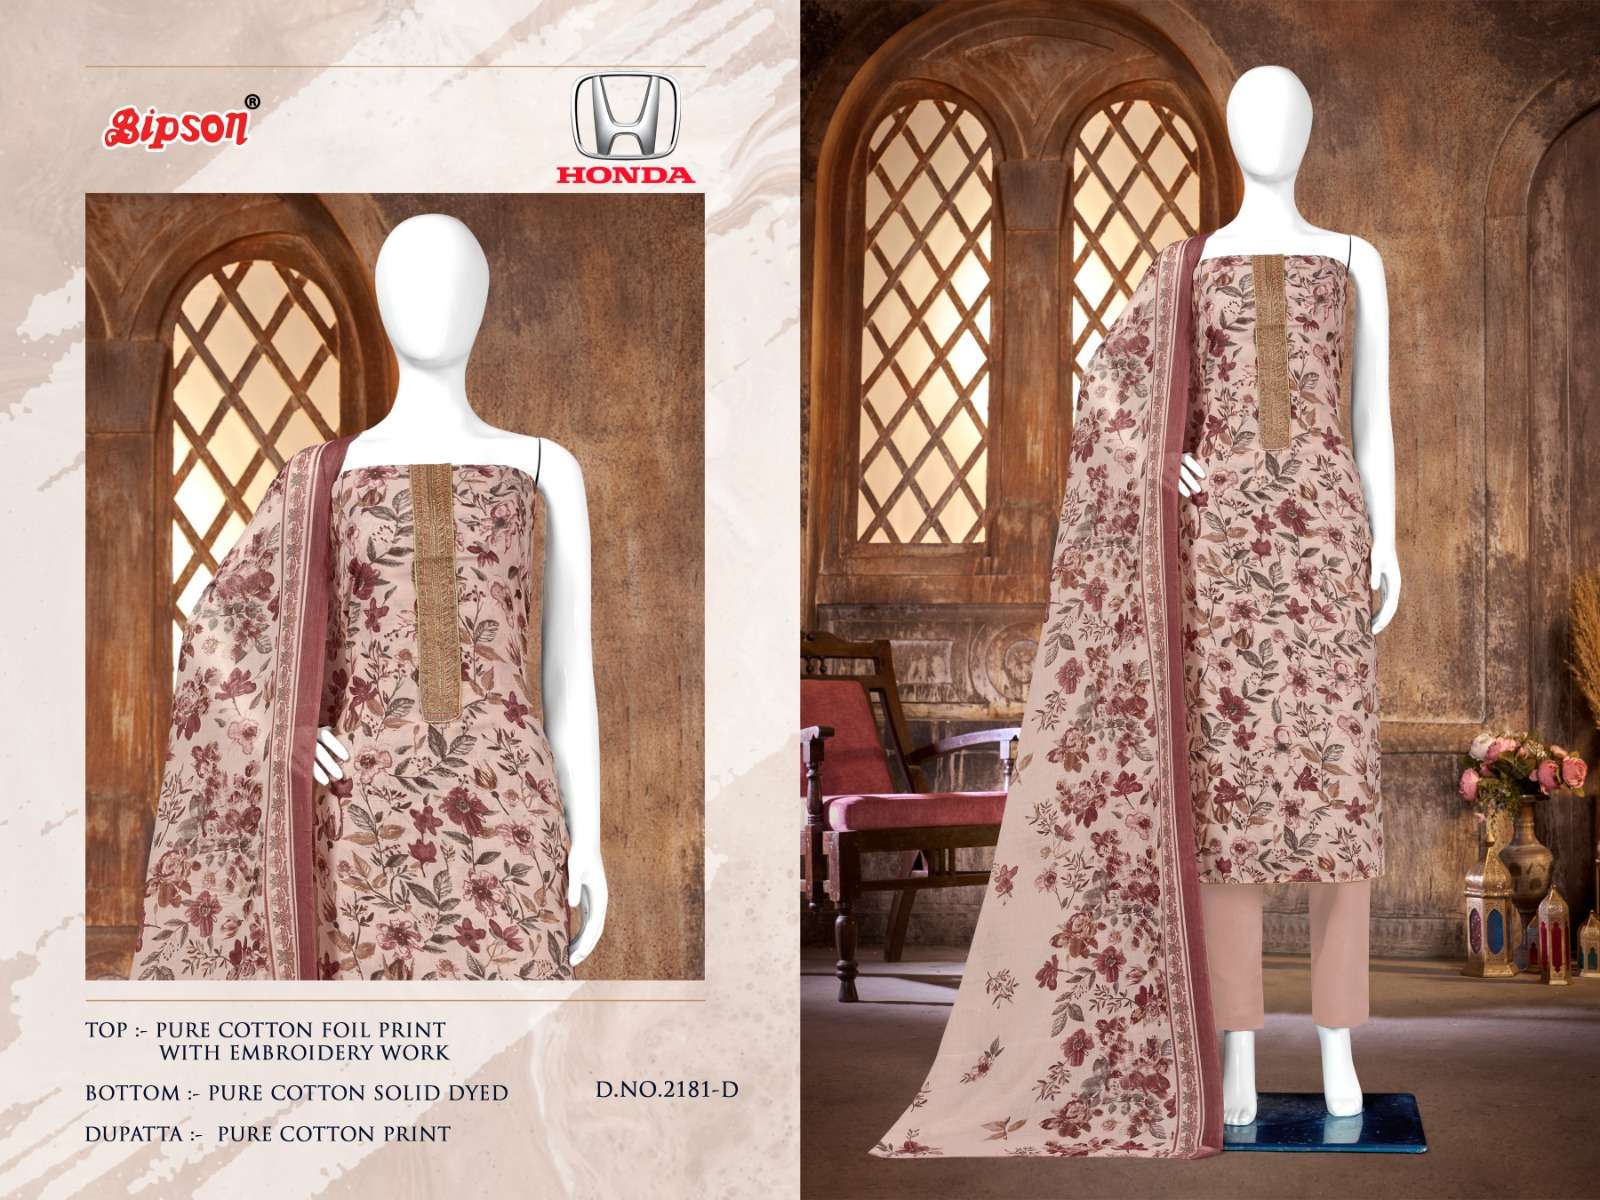 bipson prints honda 2181 series pure cotton designer salwar suits wholesale price surat